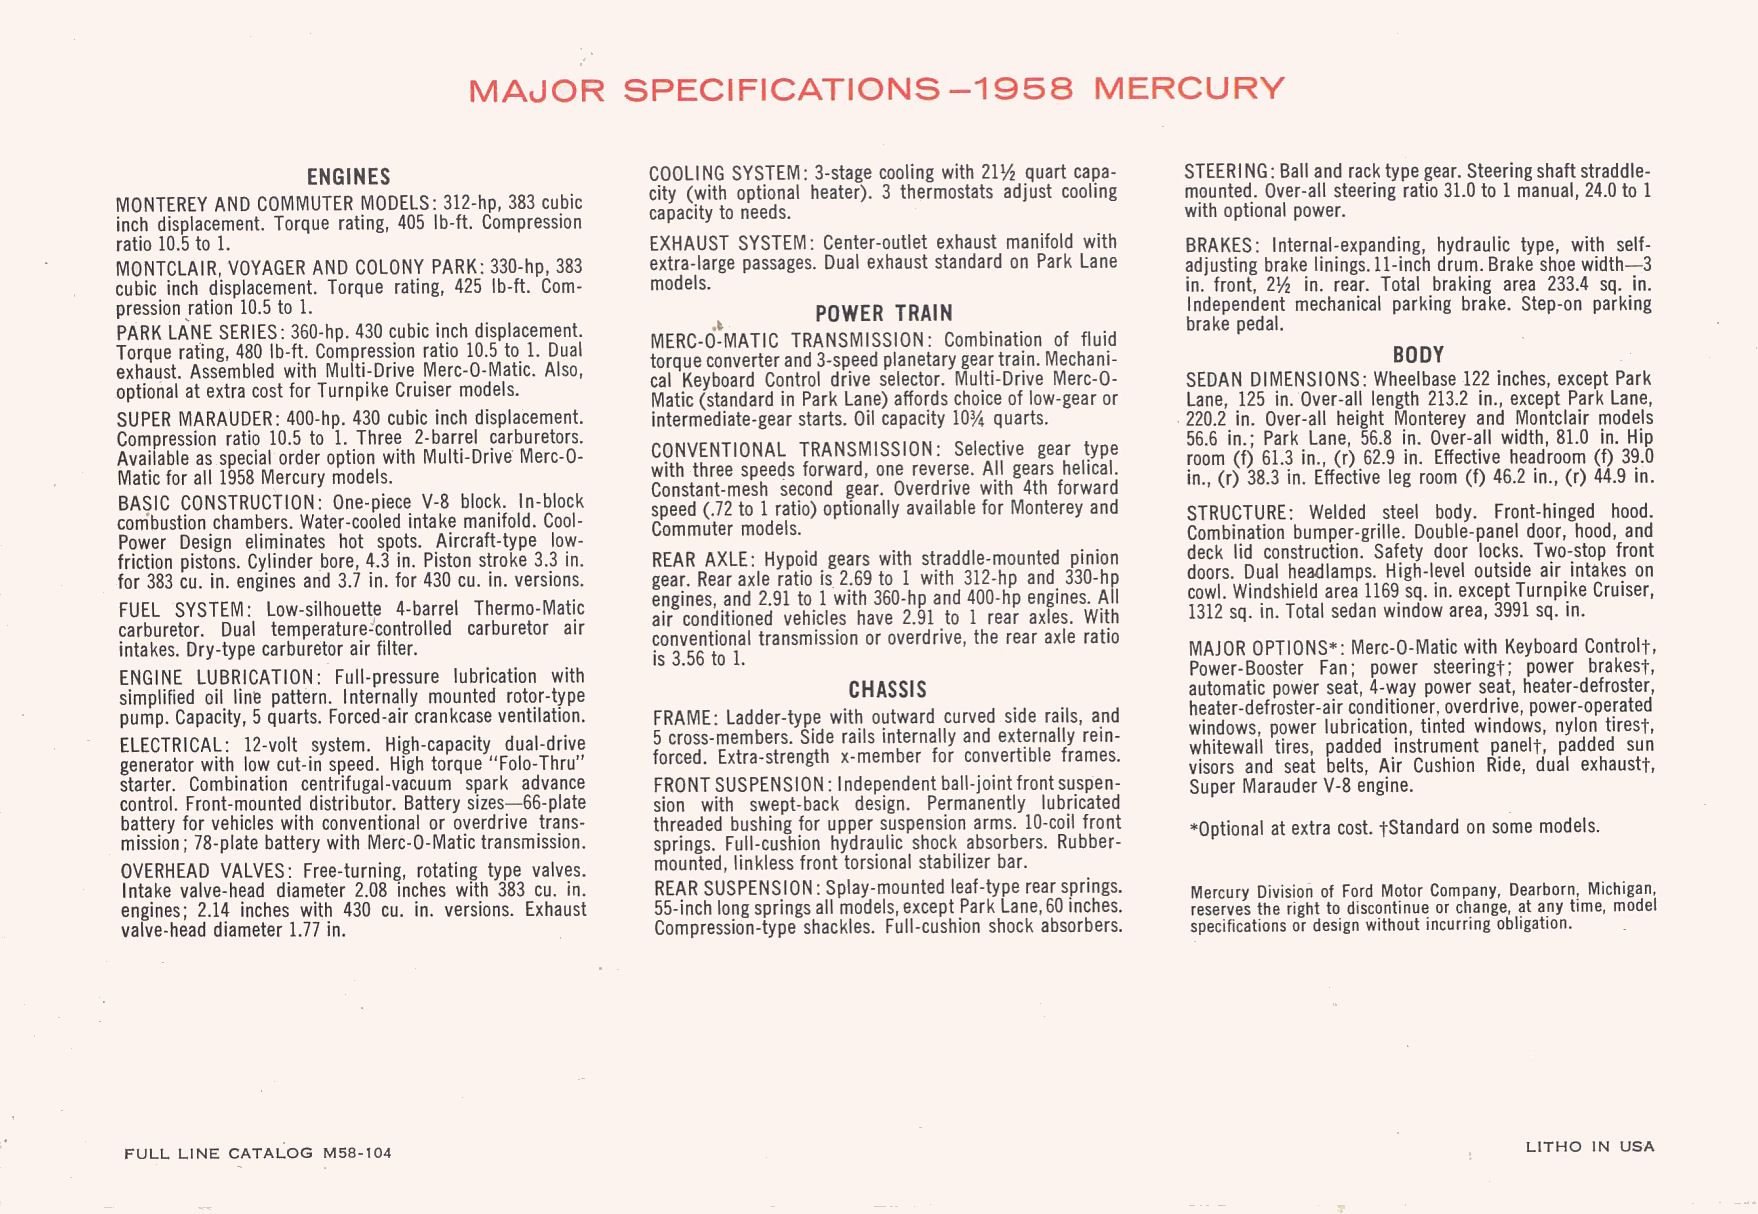 1958 Mercury Brochure Page 6